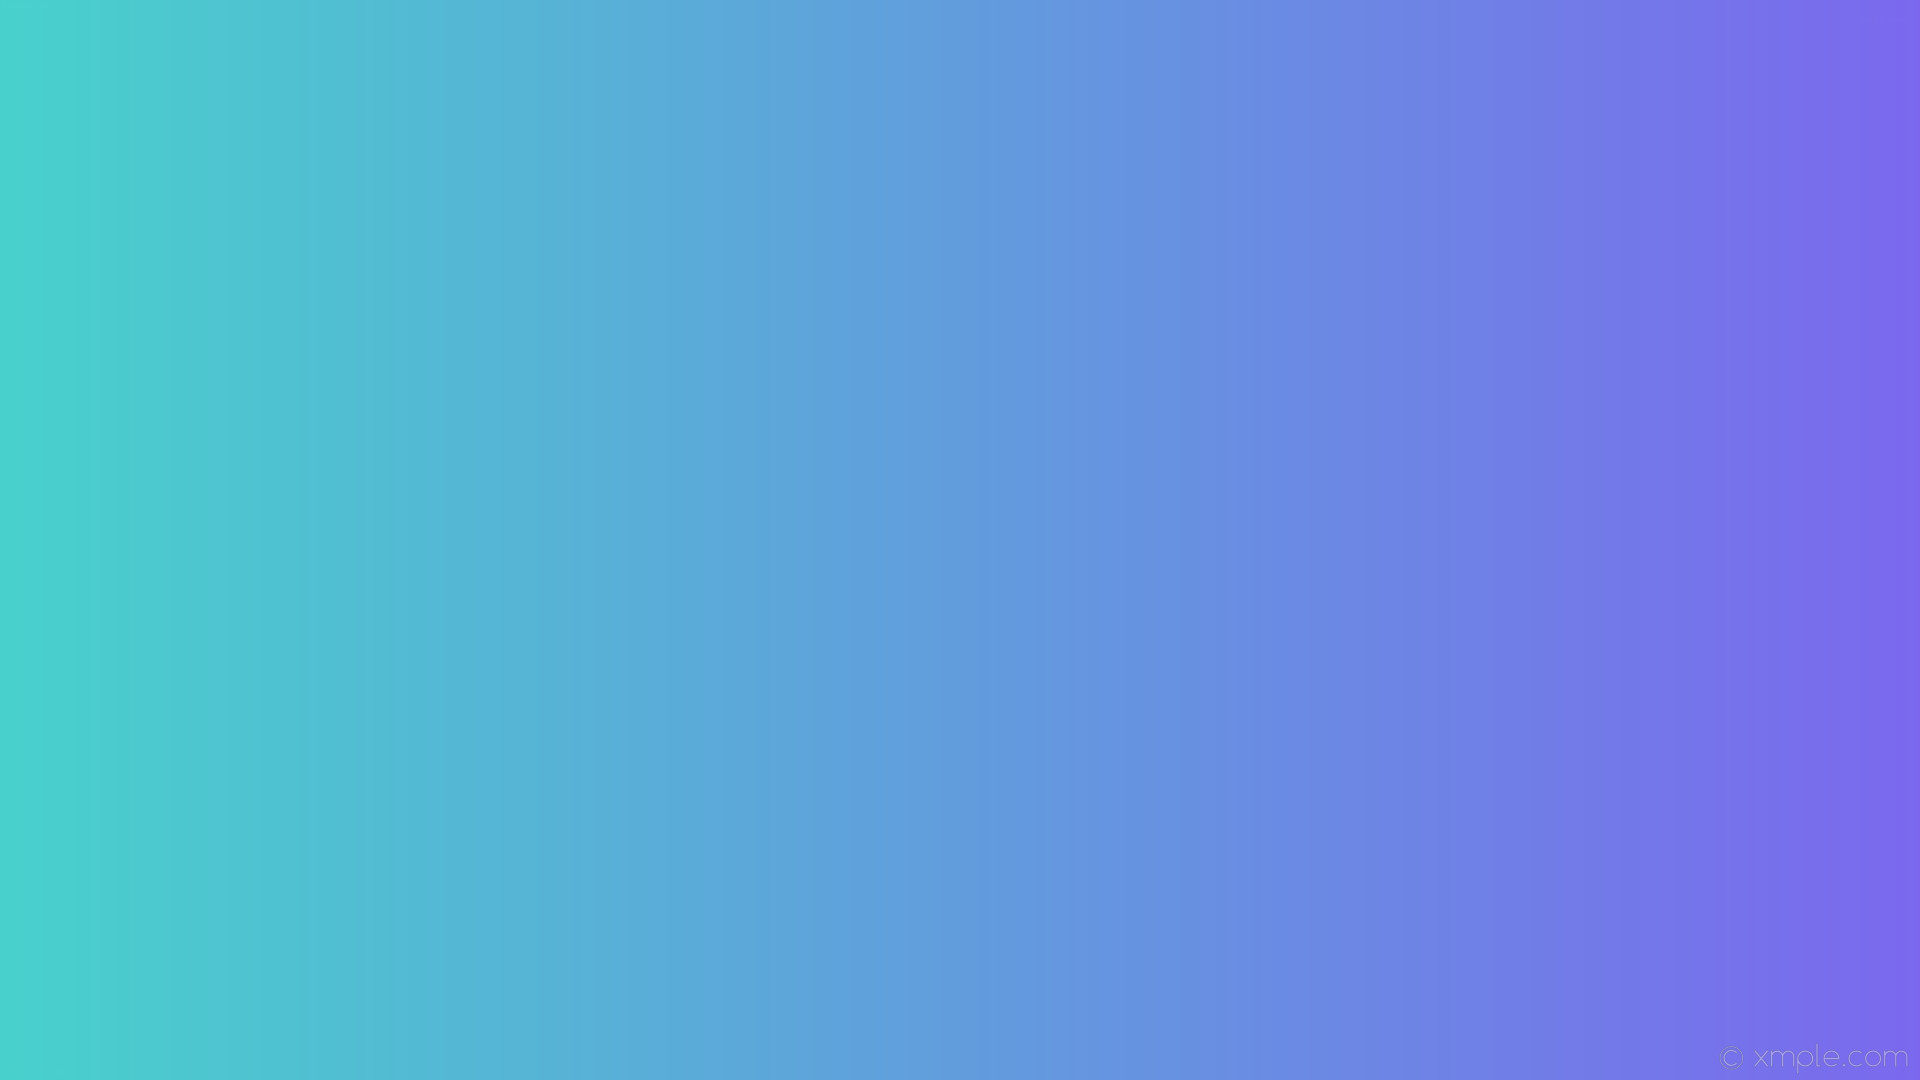 1920x1080 wallpaper blue gradient purple linear medium slate blue medium turquoise  #7b68ee #48d1cc 0Â°